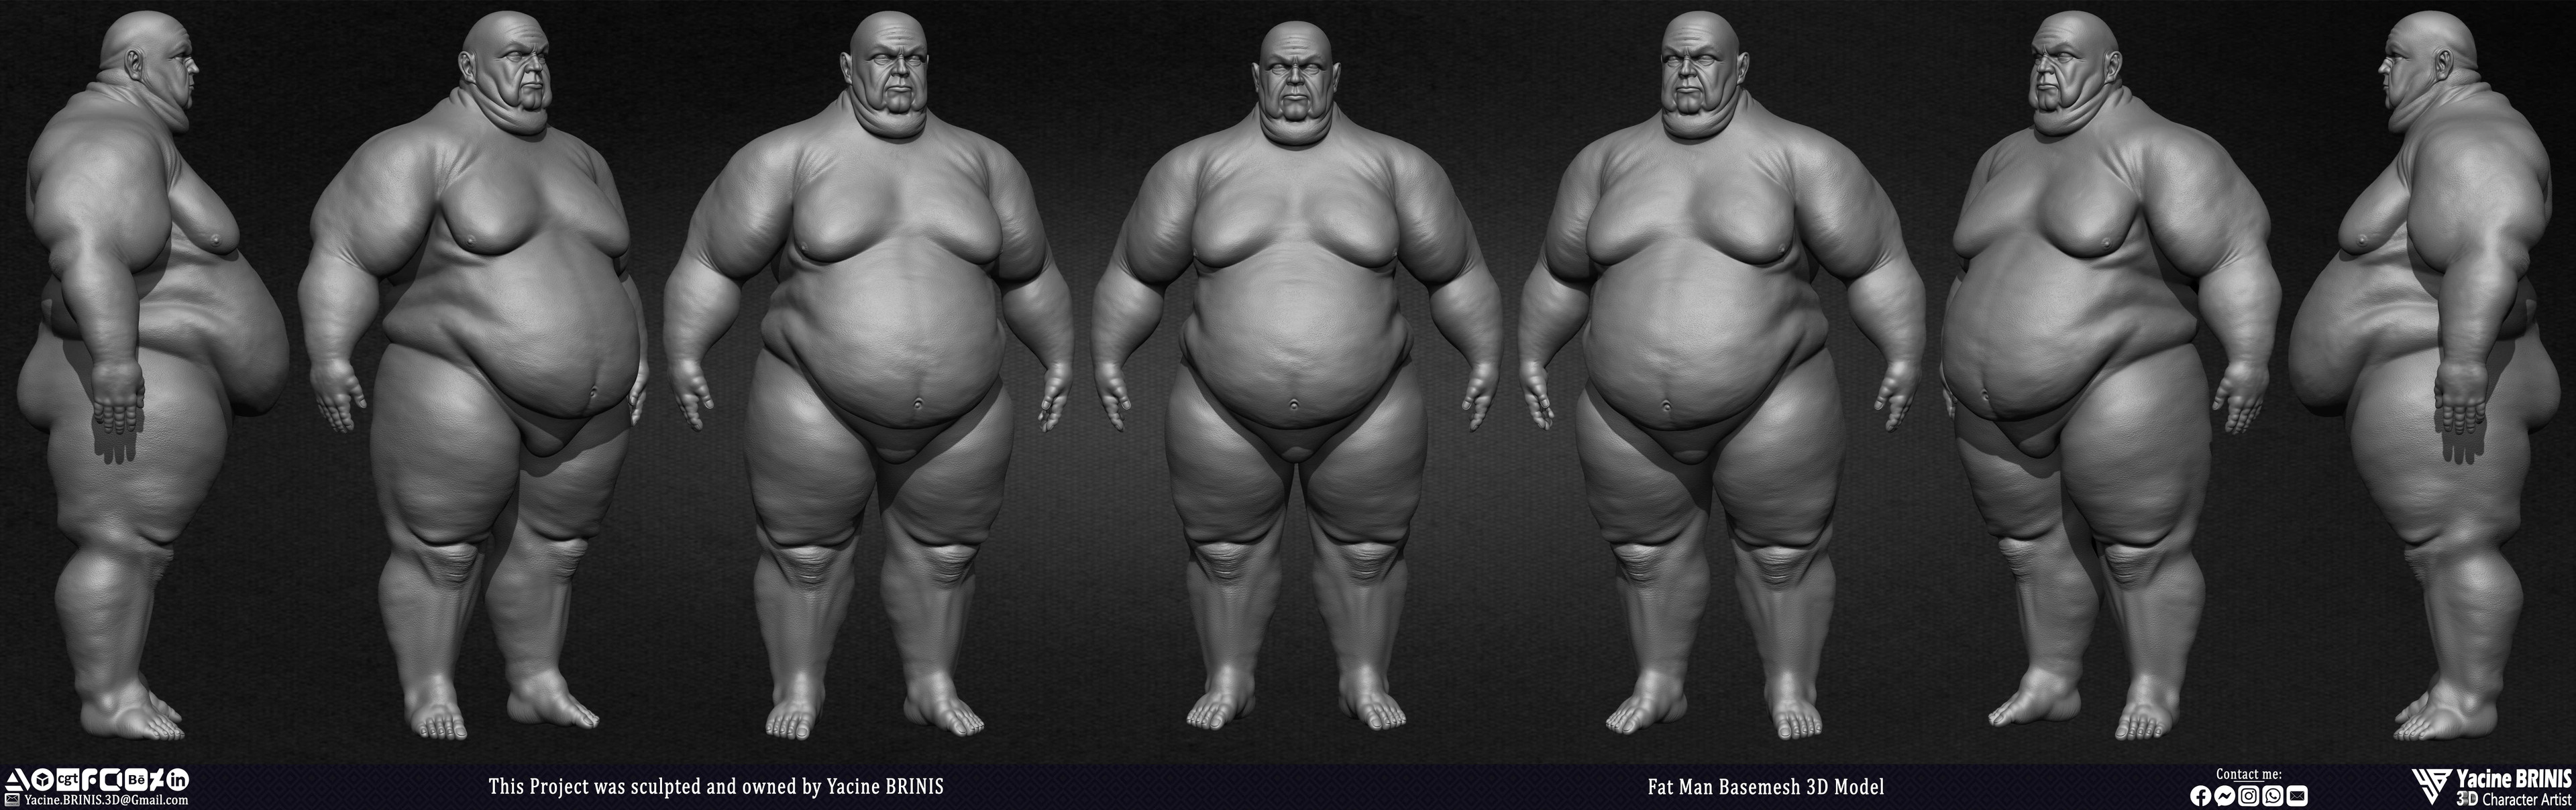 Fat man Basemesh 3D Model sculpted by Yacine BRINIS 003